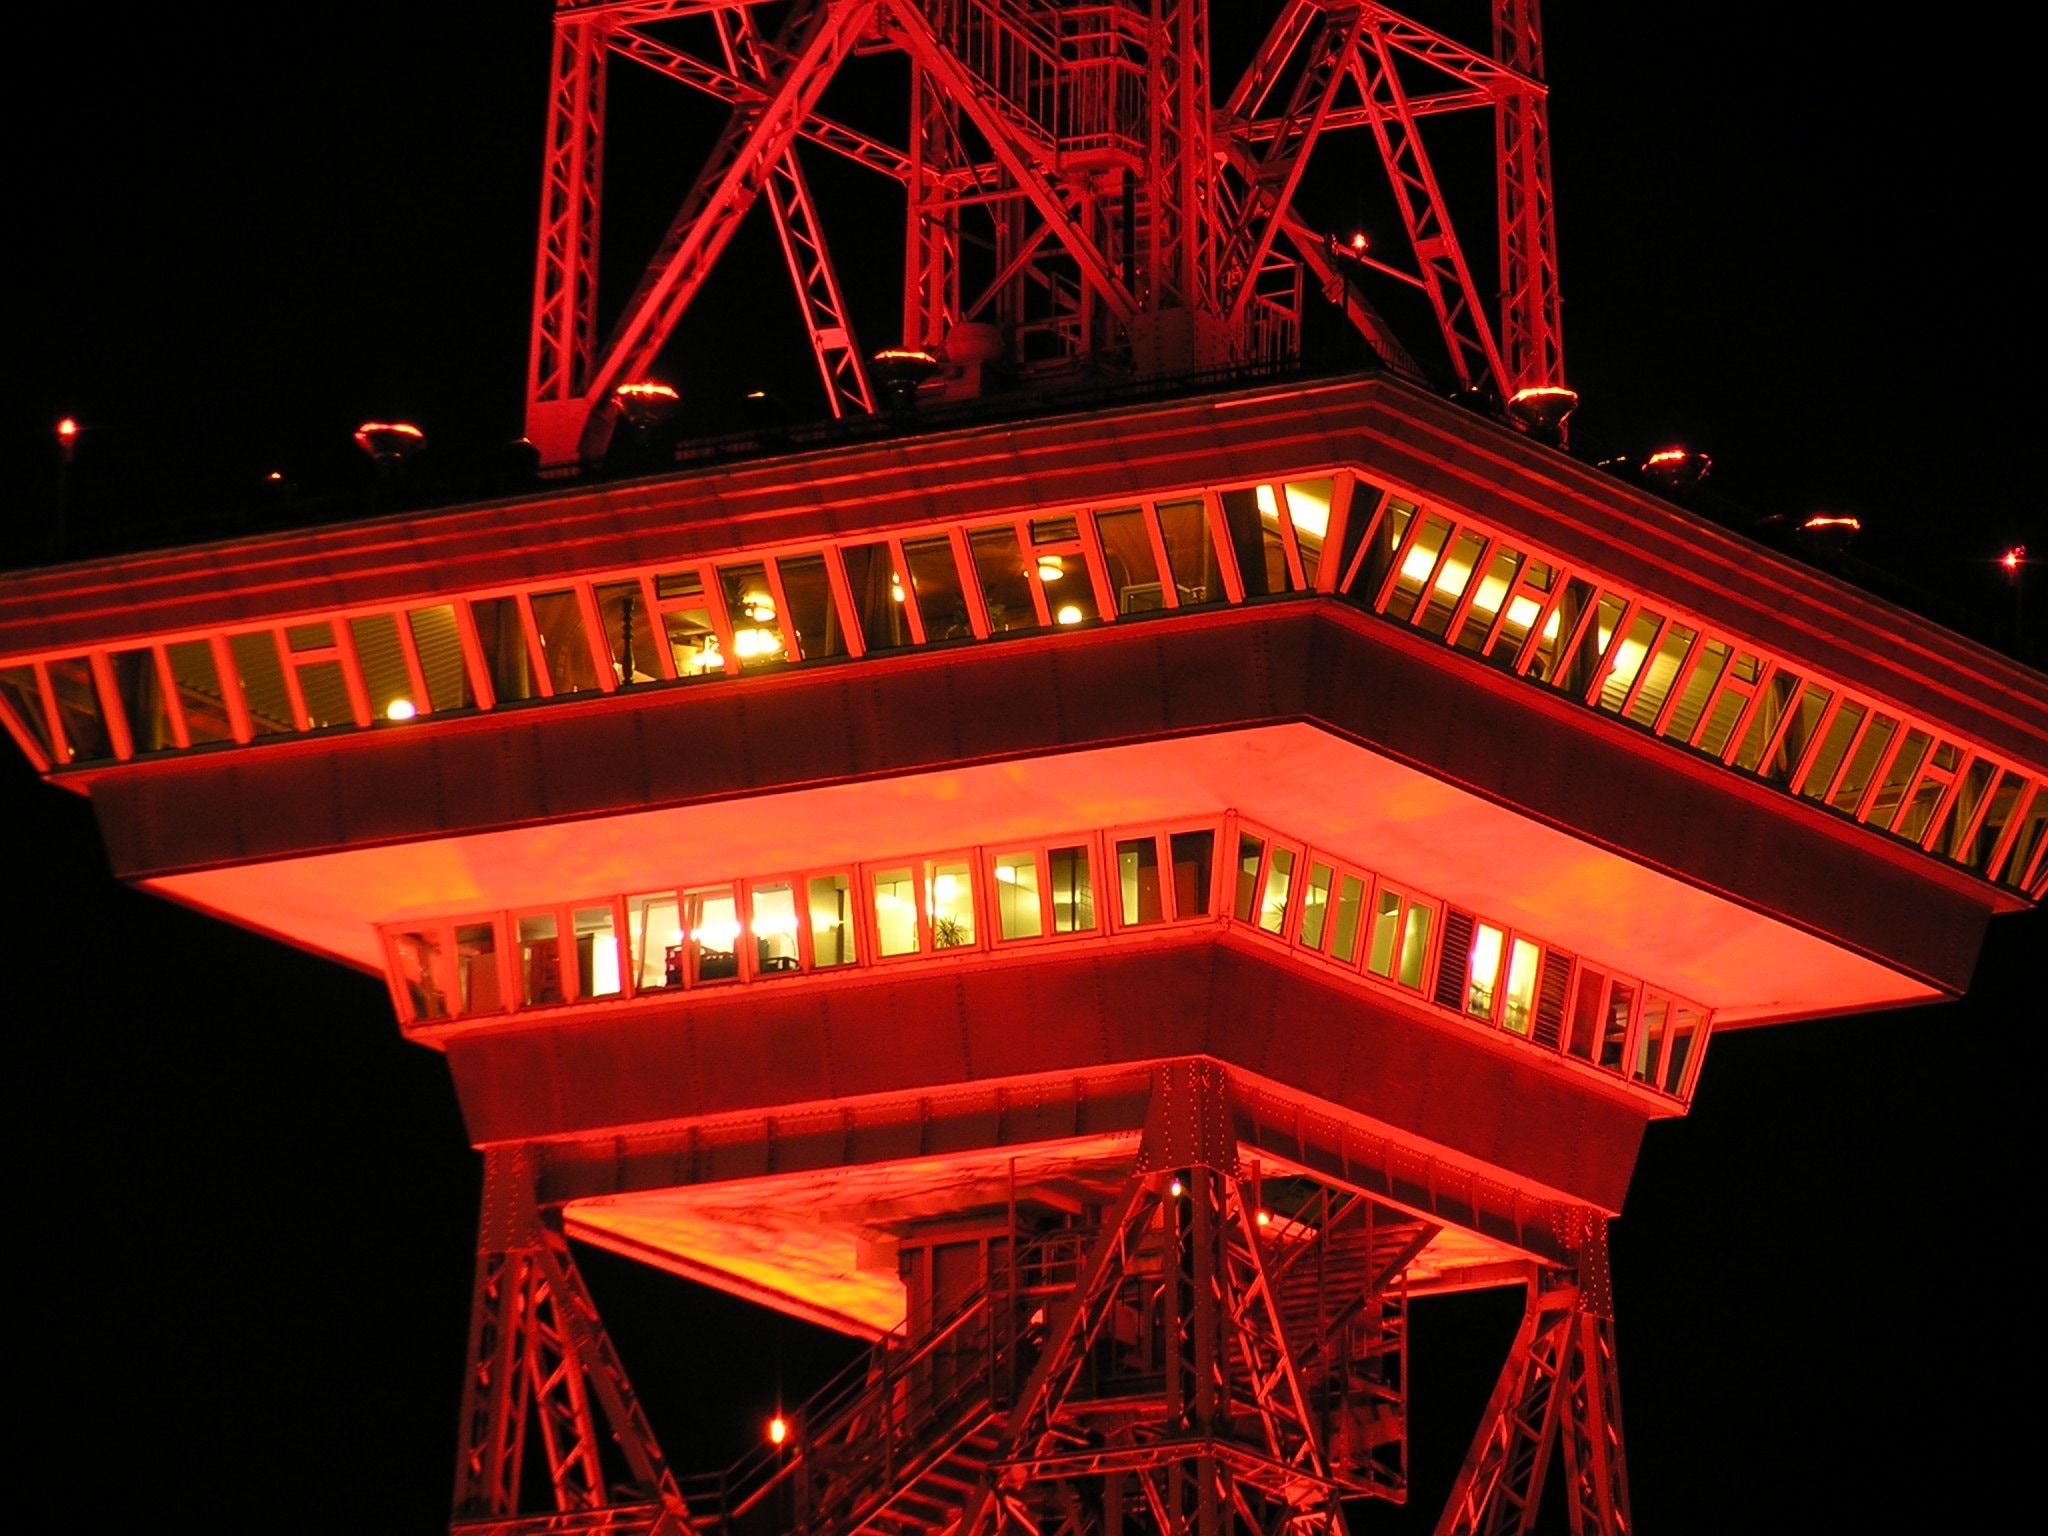 Radio Tower, Red, Berlin, Night, red, night